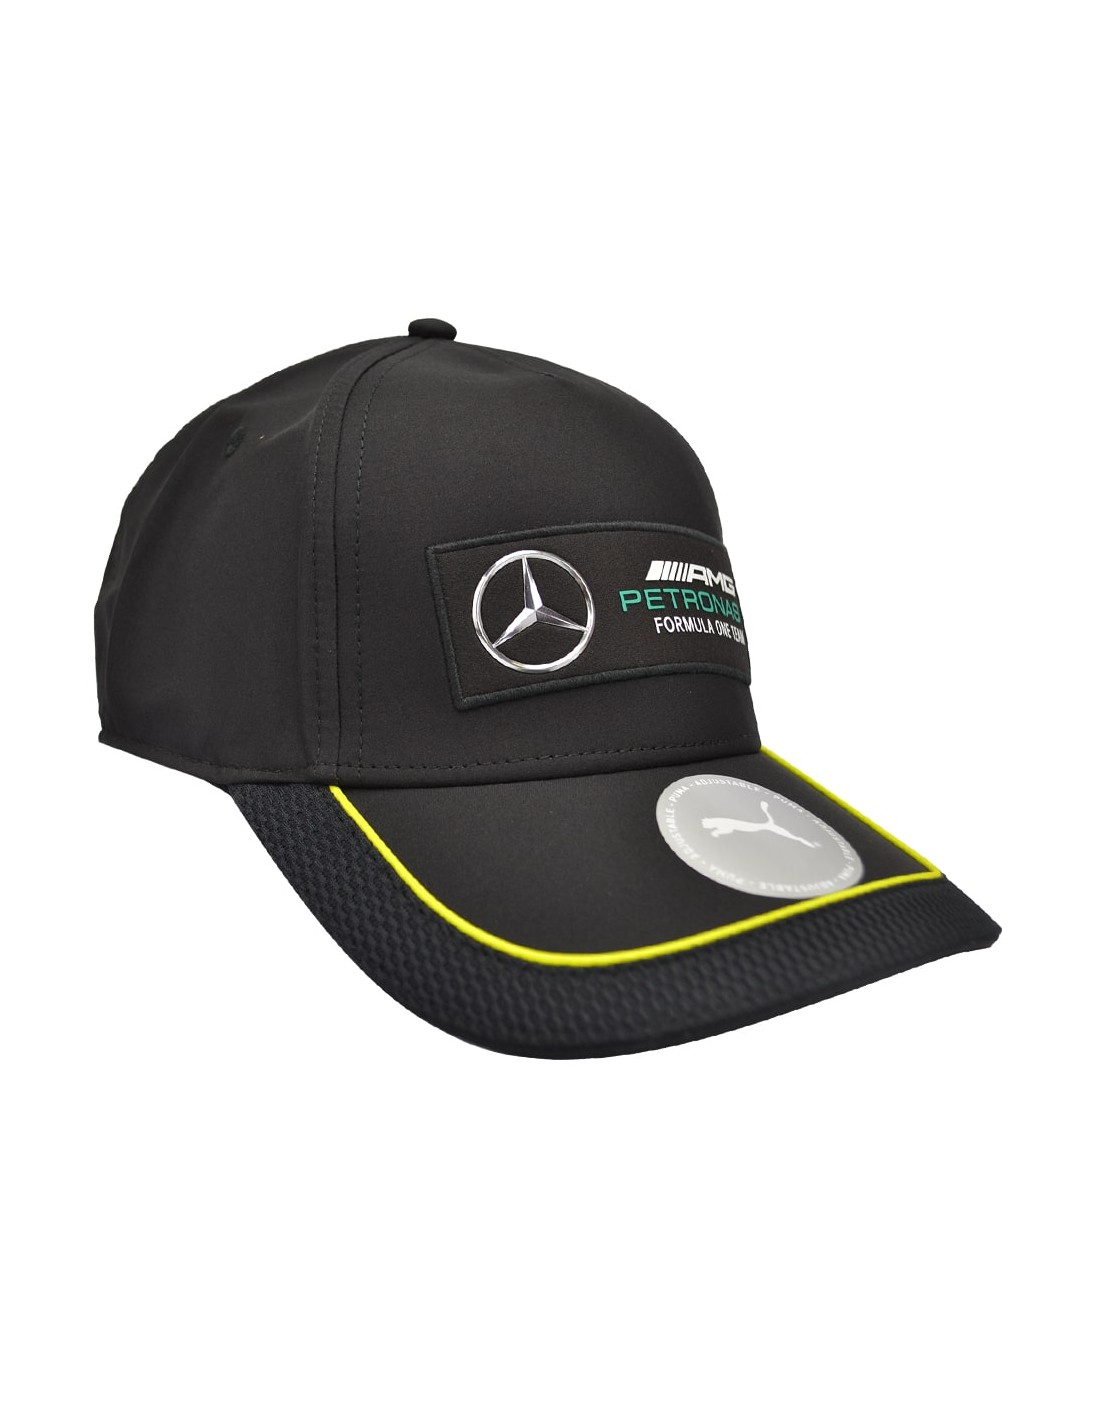 Casquette Mercedes AMG Petronas Team noir vue profil droite